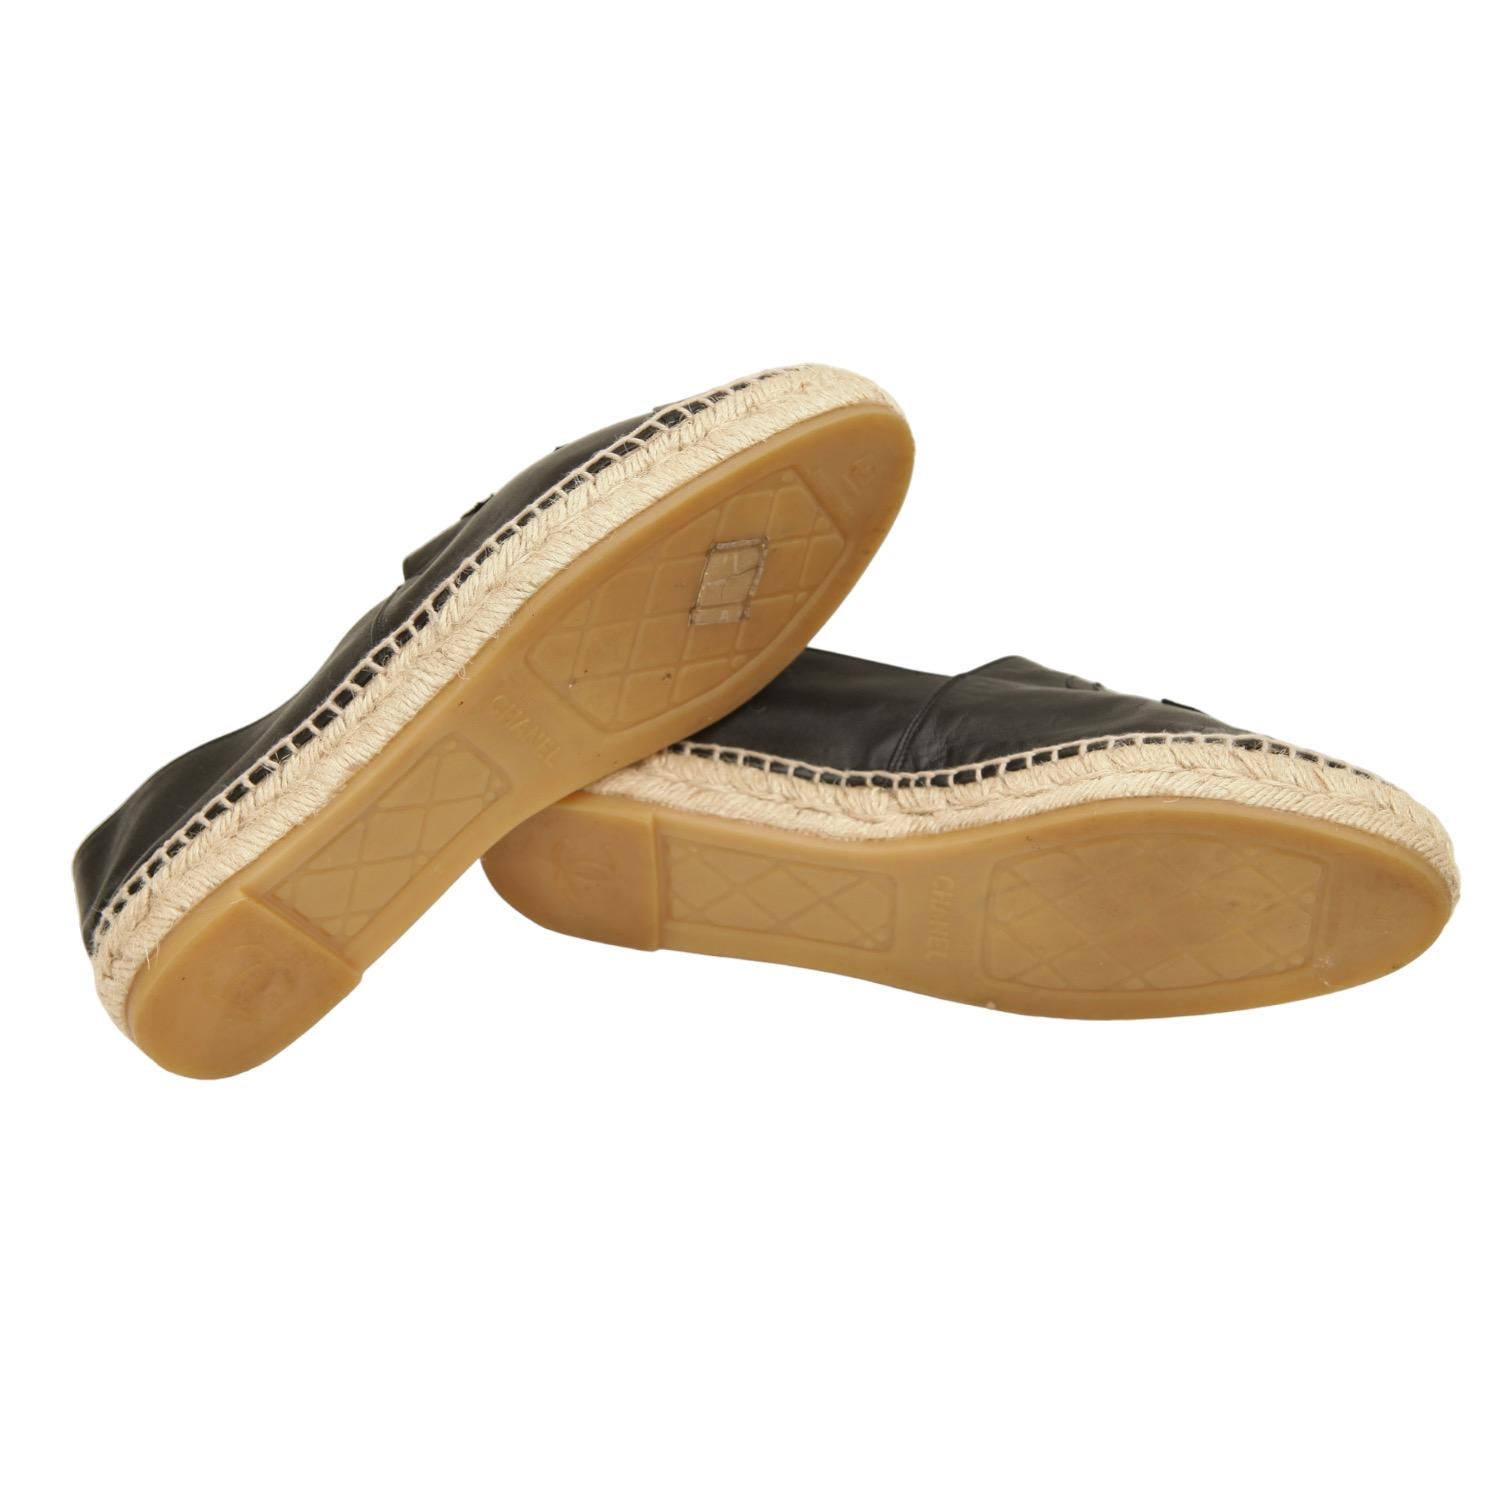 CHANEL Black Lambskin Leather Espadrilles Loafers Flats Cap Toe CC Shoes Sz 40 7